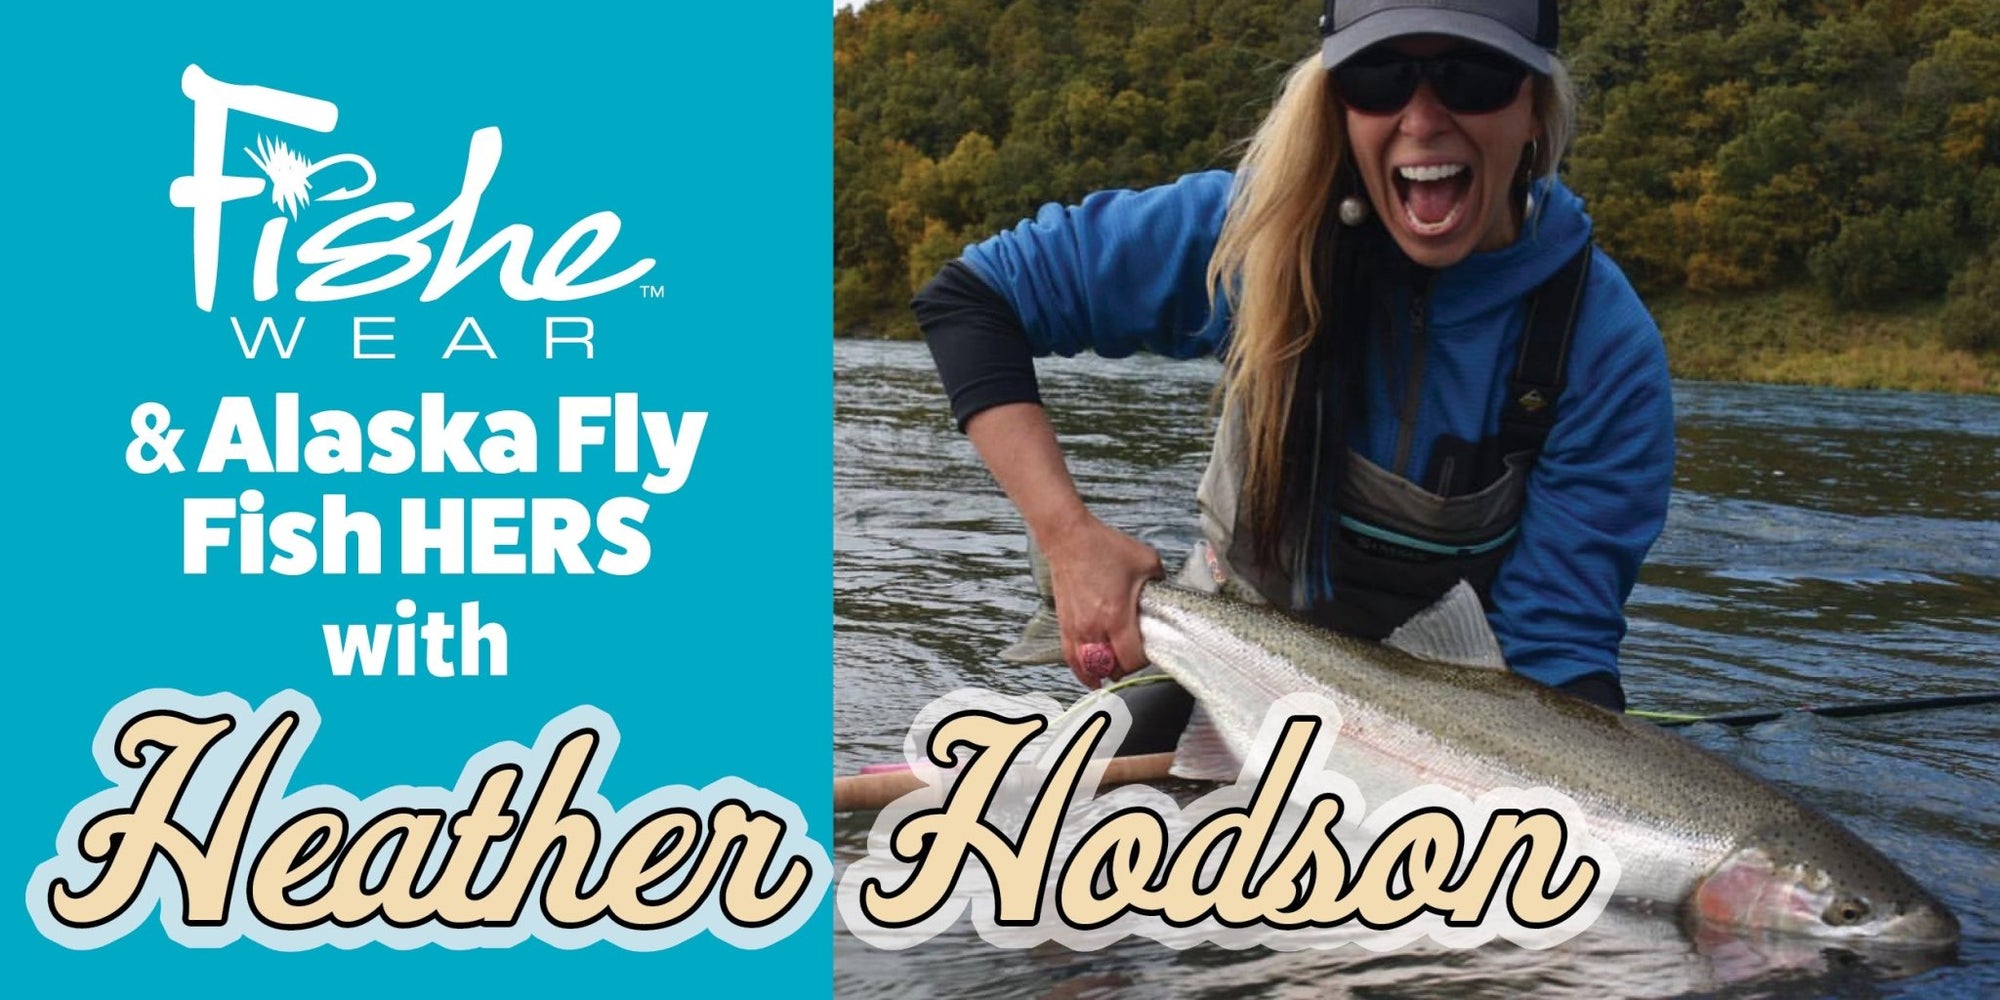 Heather Hodson & Alaska Fly Fish HERS - FisheWear